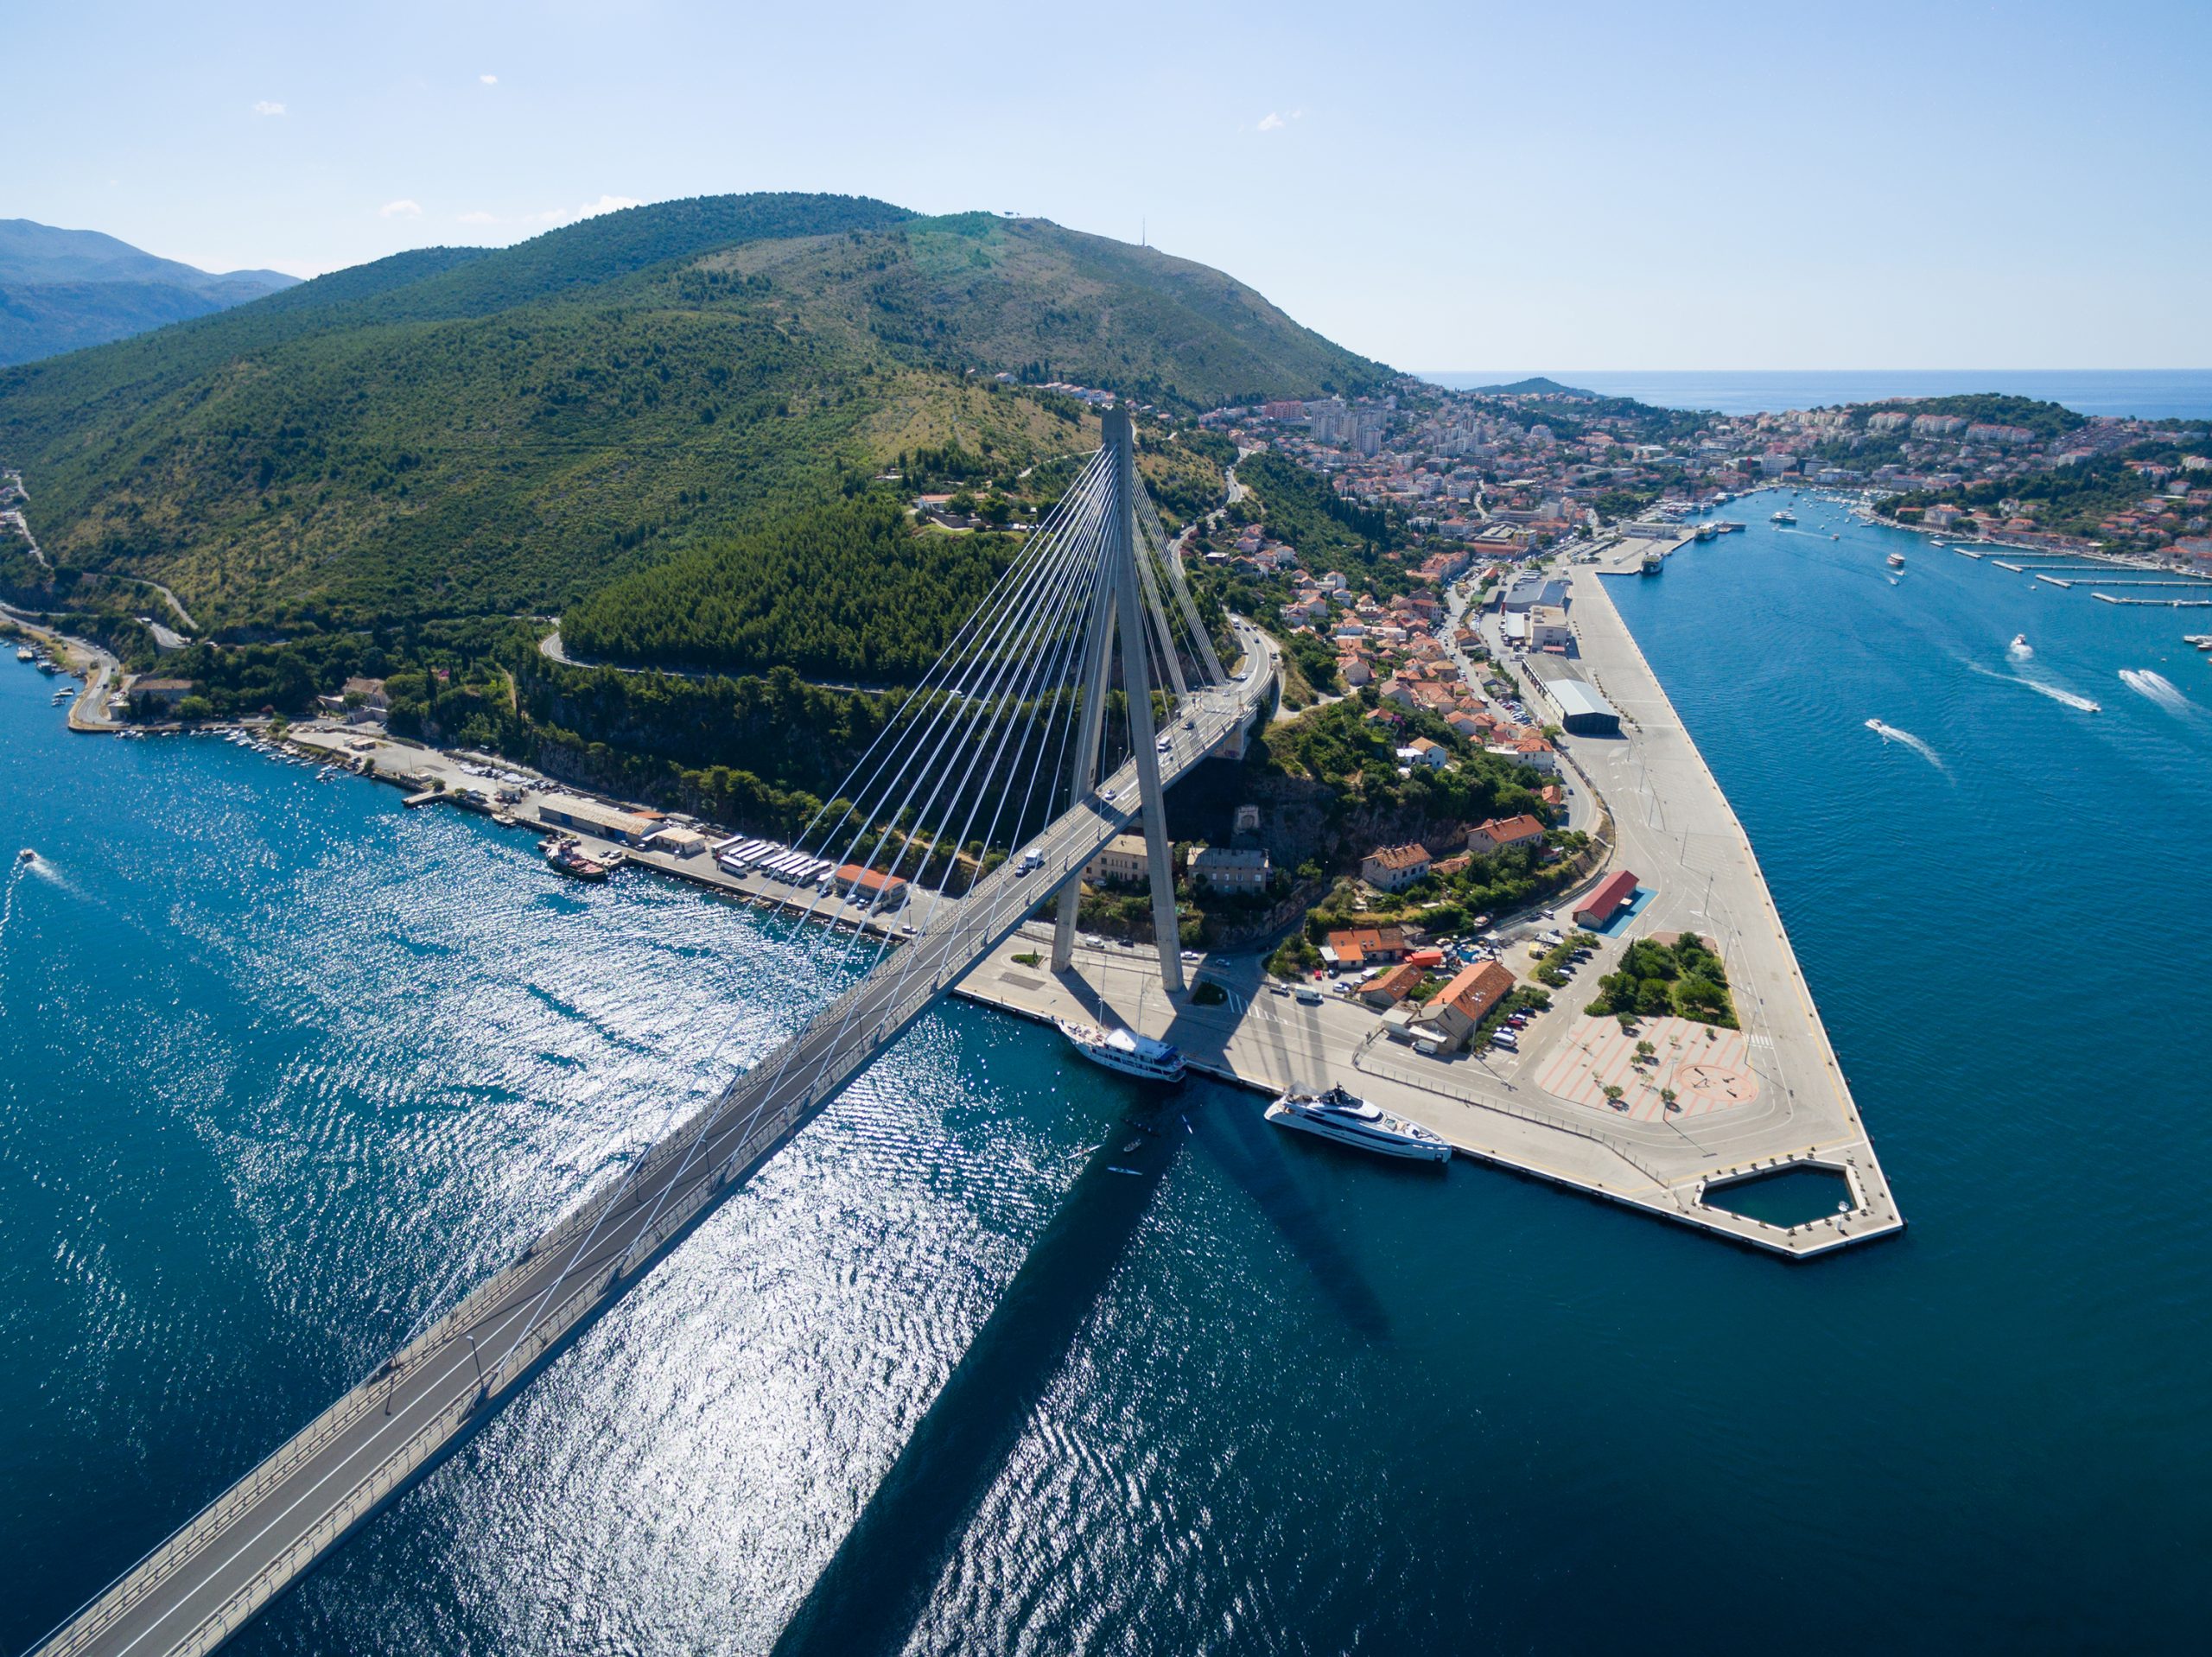 See The Impressive Dubrovnik Bridge On Your Dubrovnik Day Tour From Split